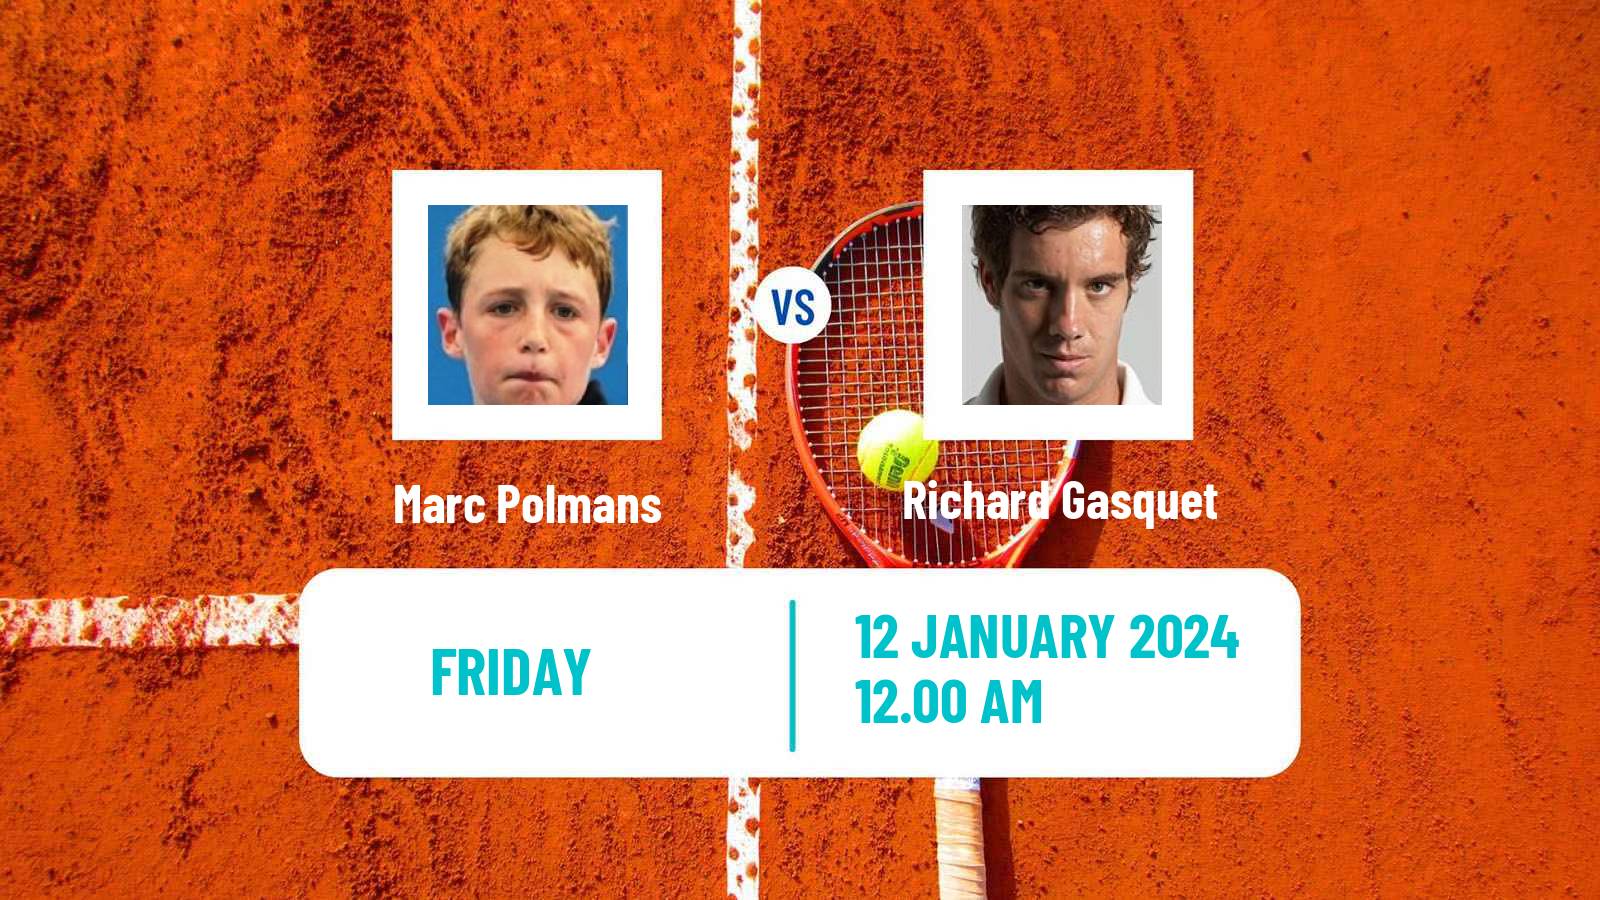 Tennis Exhibition Others Matches Tennis Men Marc Polmans - Richard Gasquet